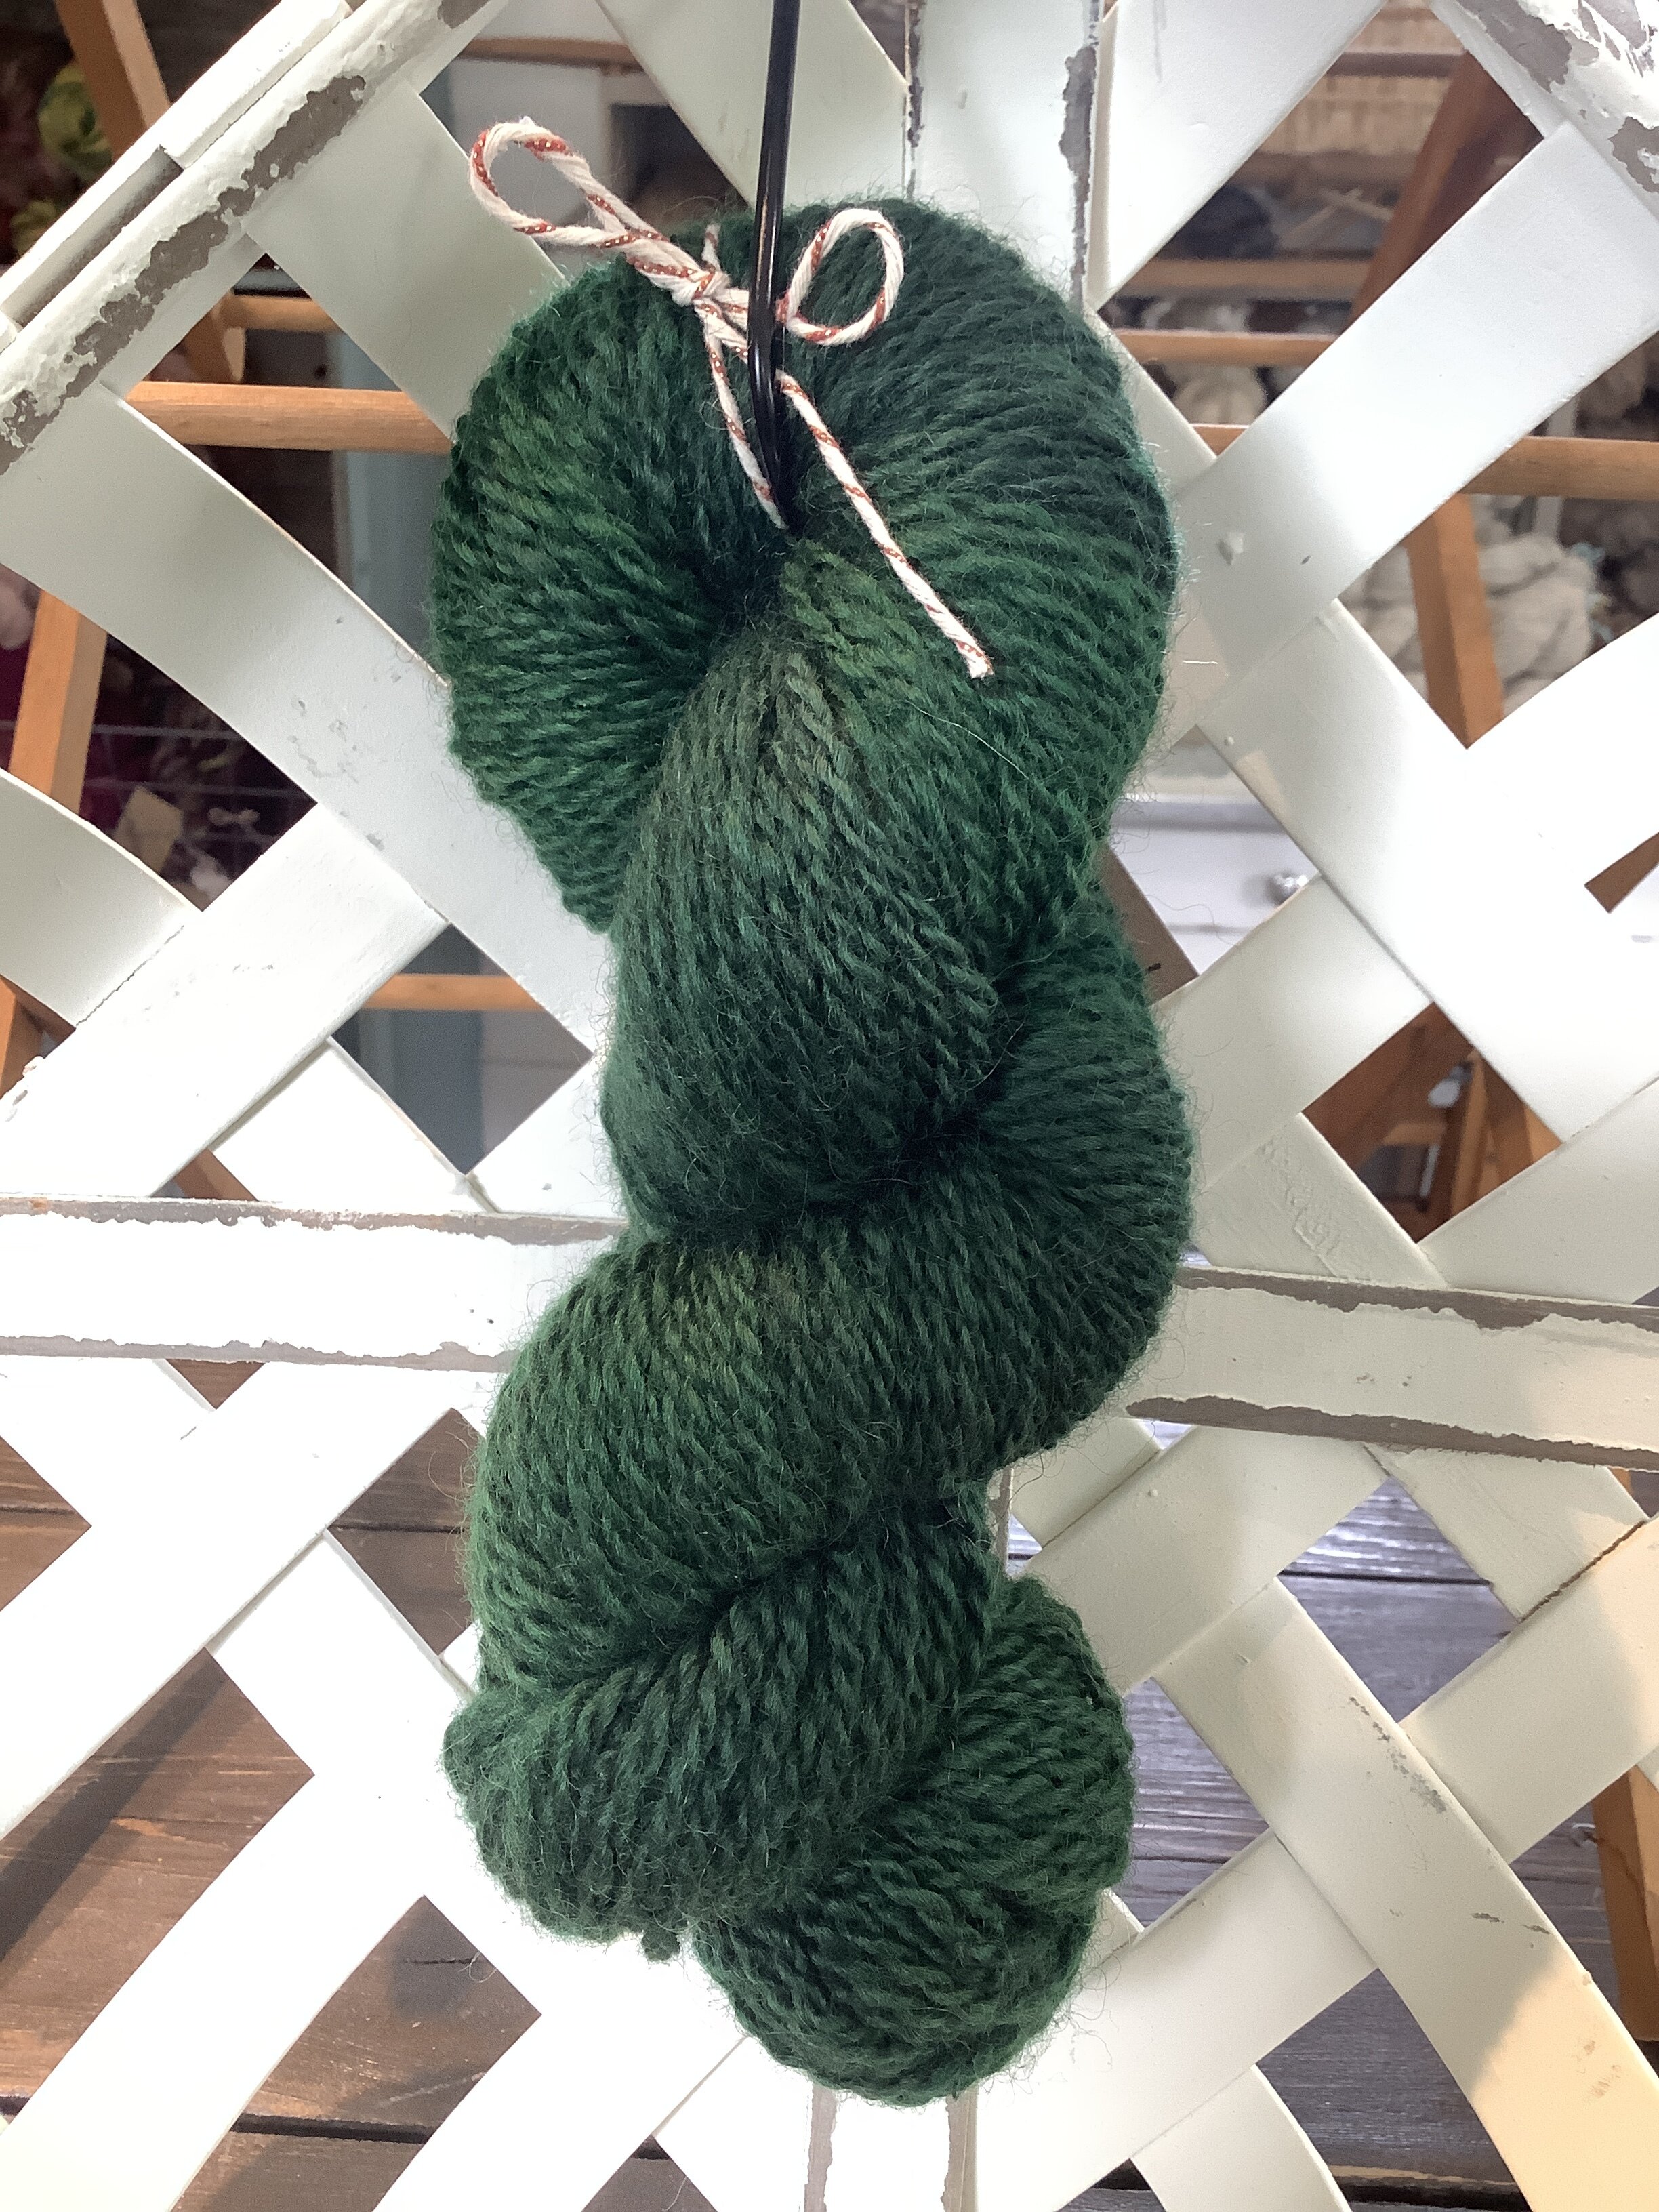 100% Shetland Hand-dyed Worsted Yarn